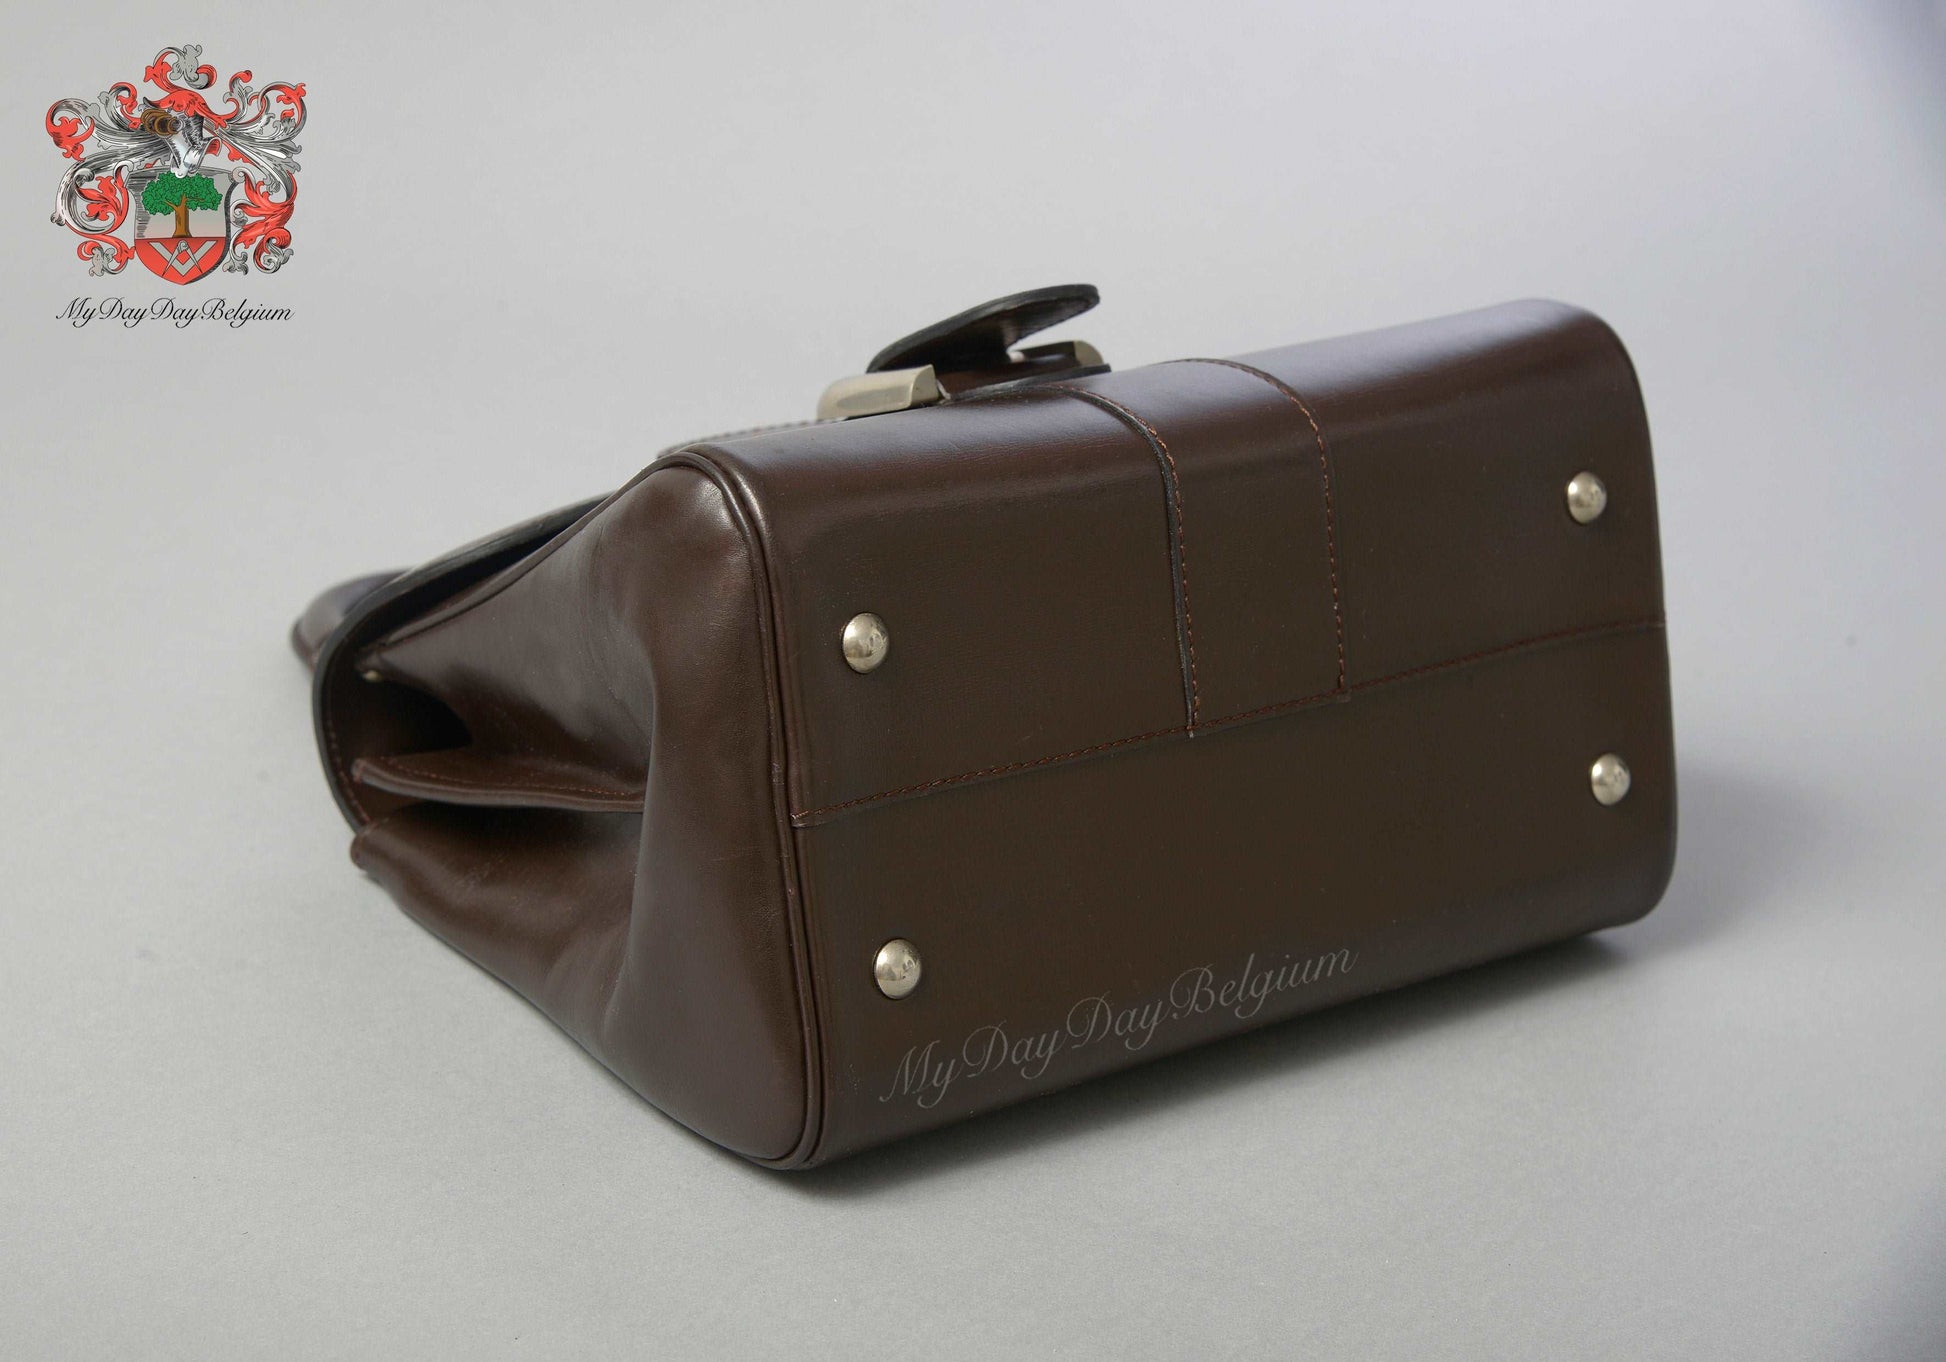 Delvaux black leather Brillant - Vintage bags by anneke